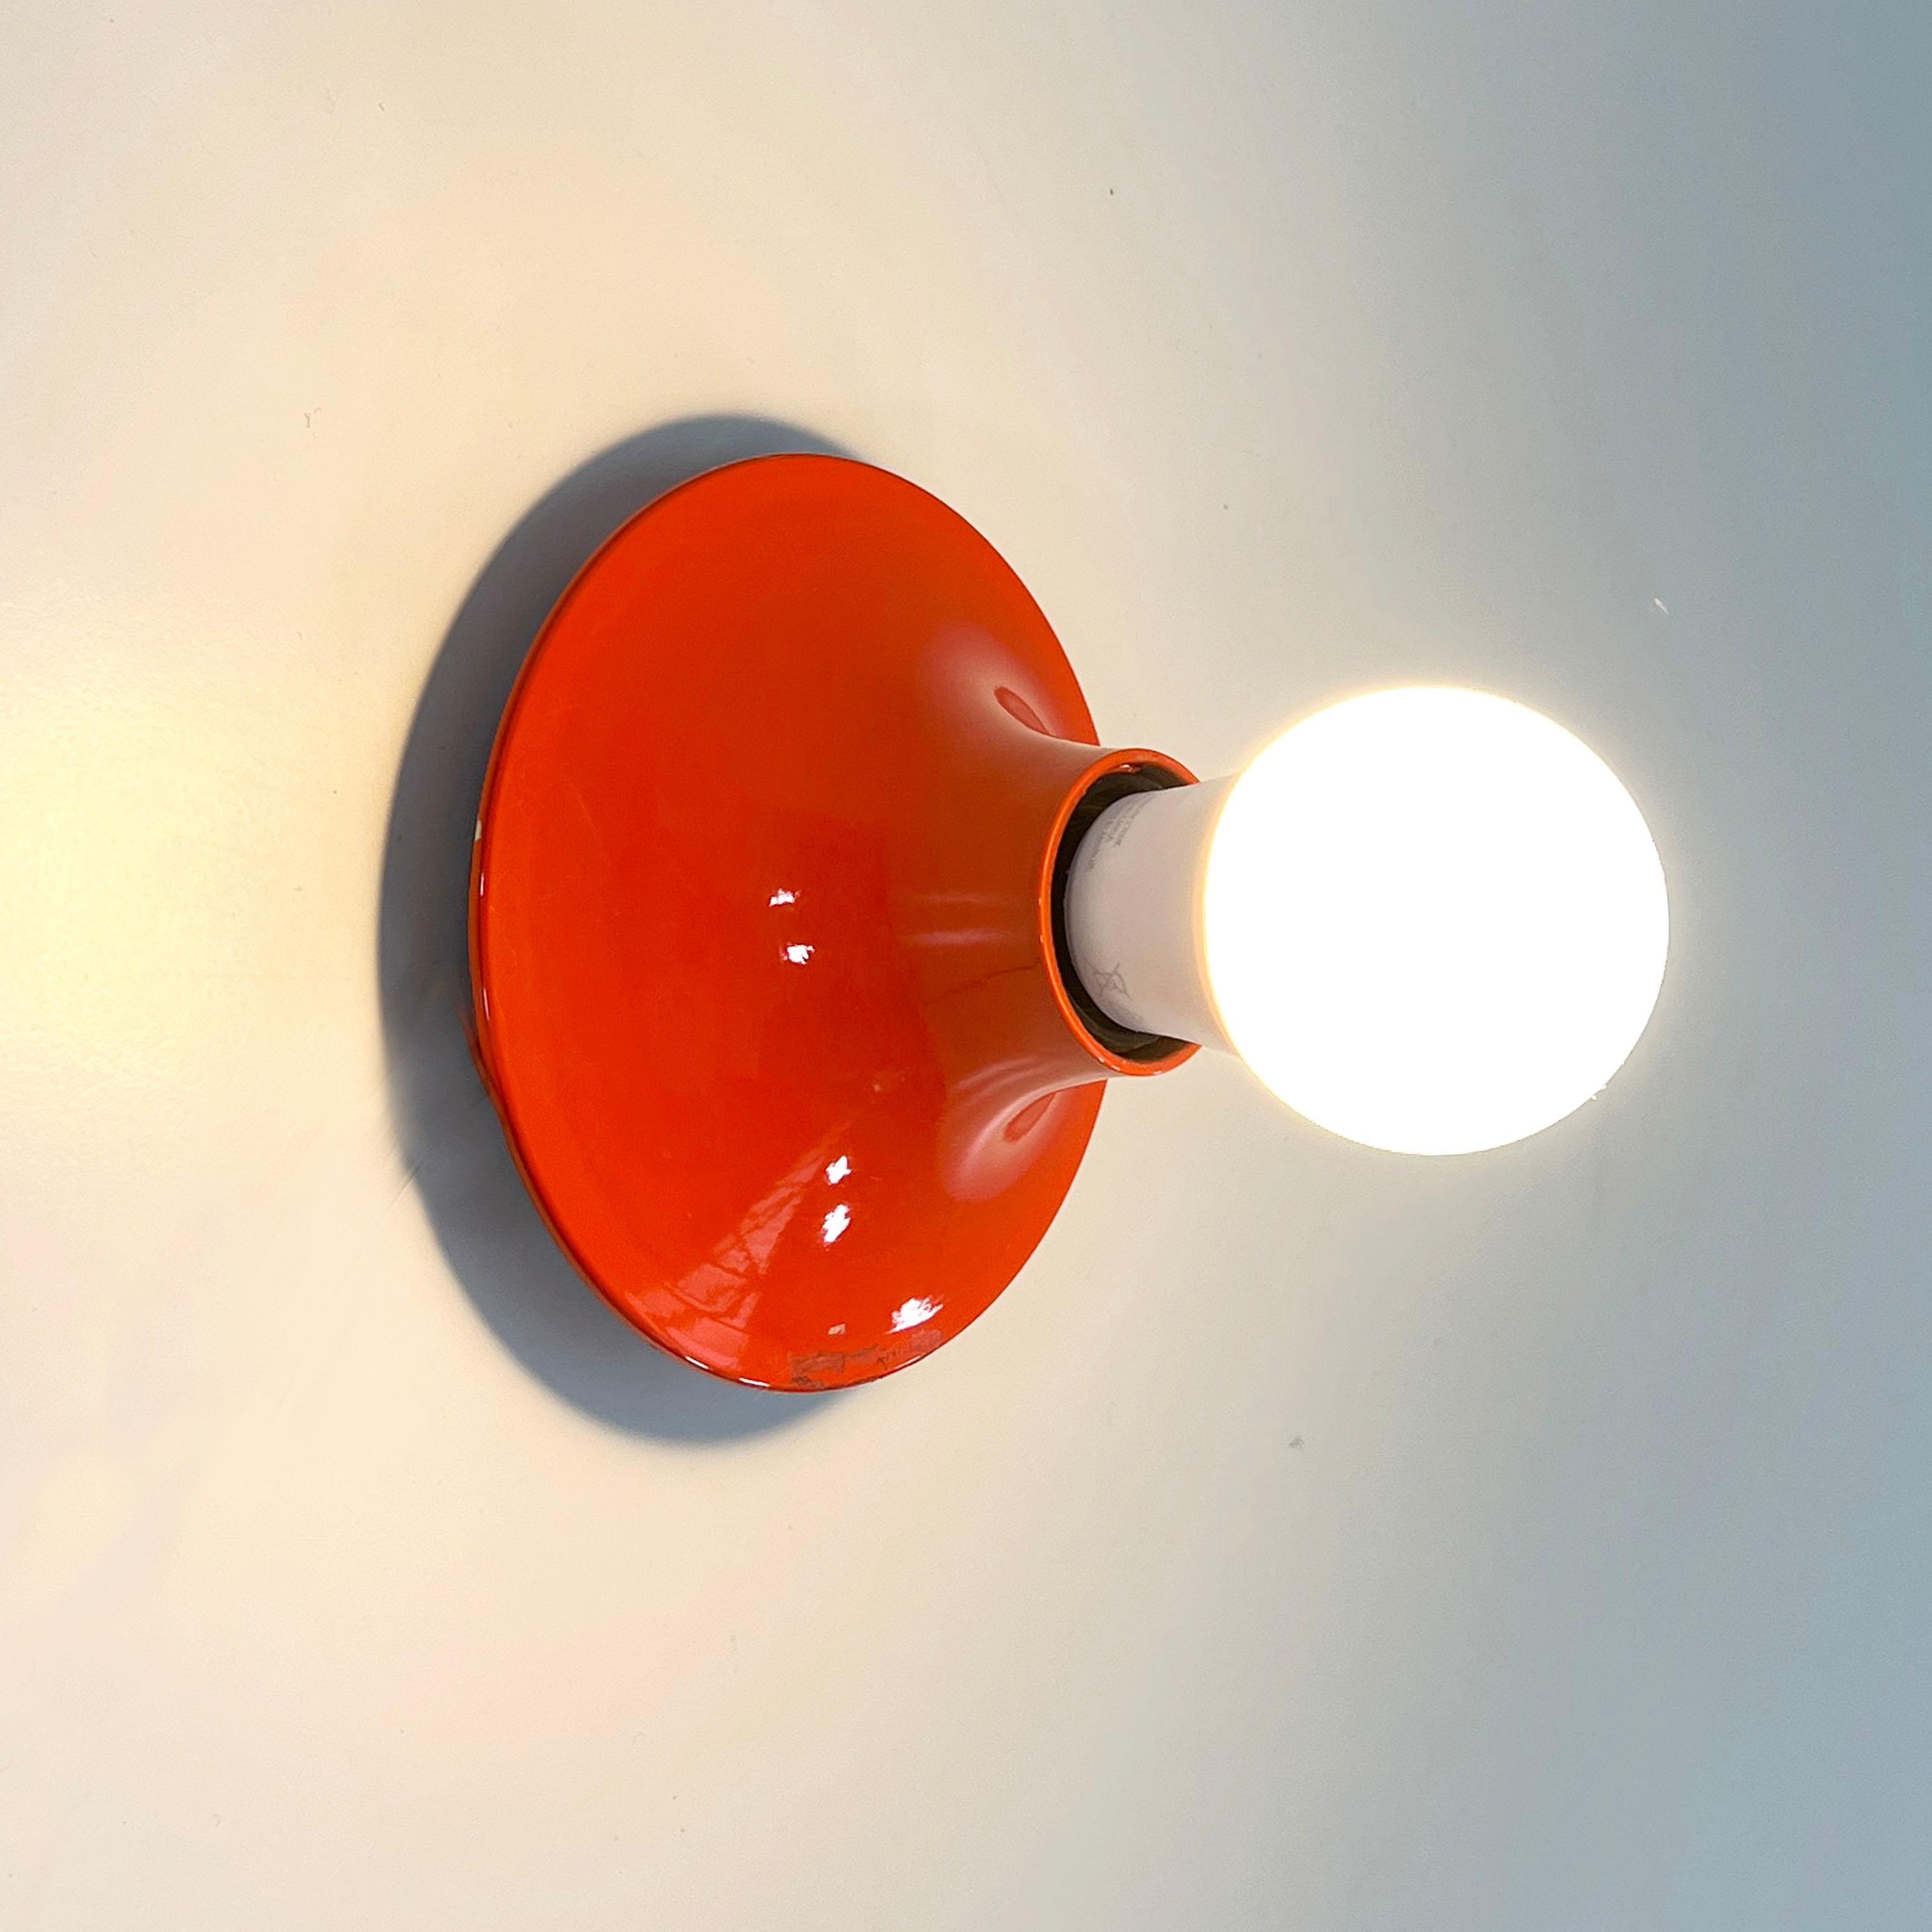 Designer - Vico Magistretti
Producer - Artemide
Model - “Teti” Wall Lamp 
Design Period - Sixties
Measurements - Width 7 cm x Depth 7 cm x Height 14 cm
Materials - Plastic
Color - Orange
Light wear consistent with age and use.